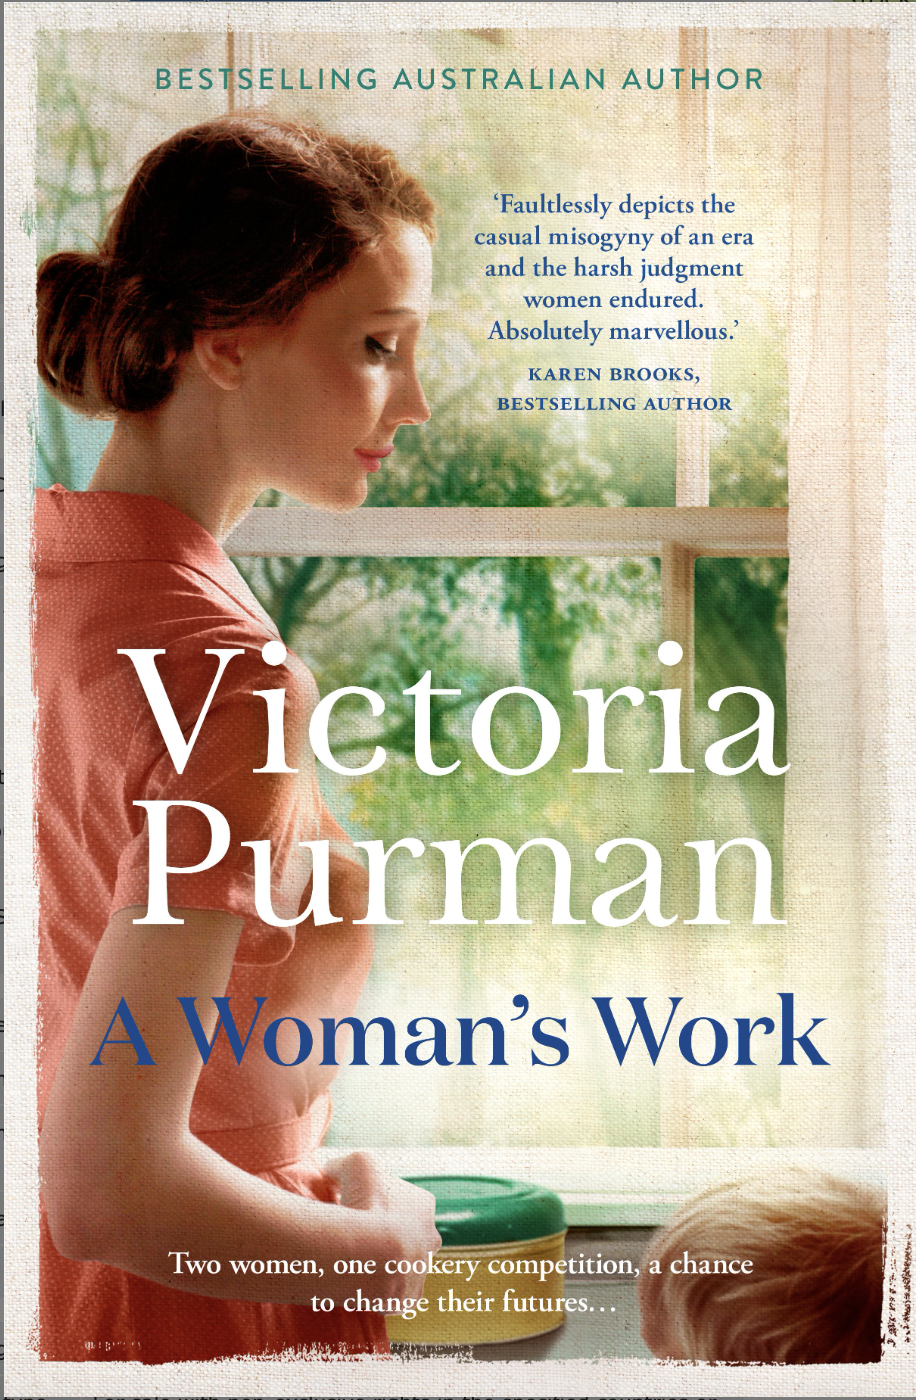 A Woman's Work - Victoria Purman